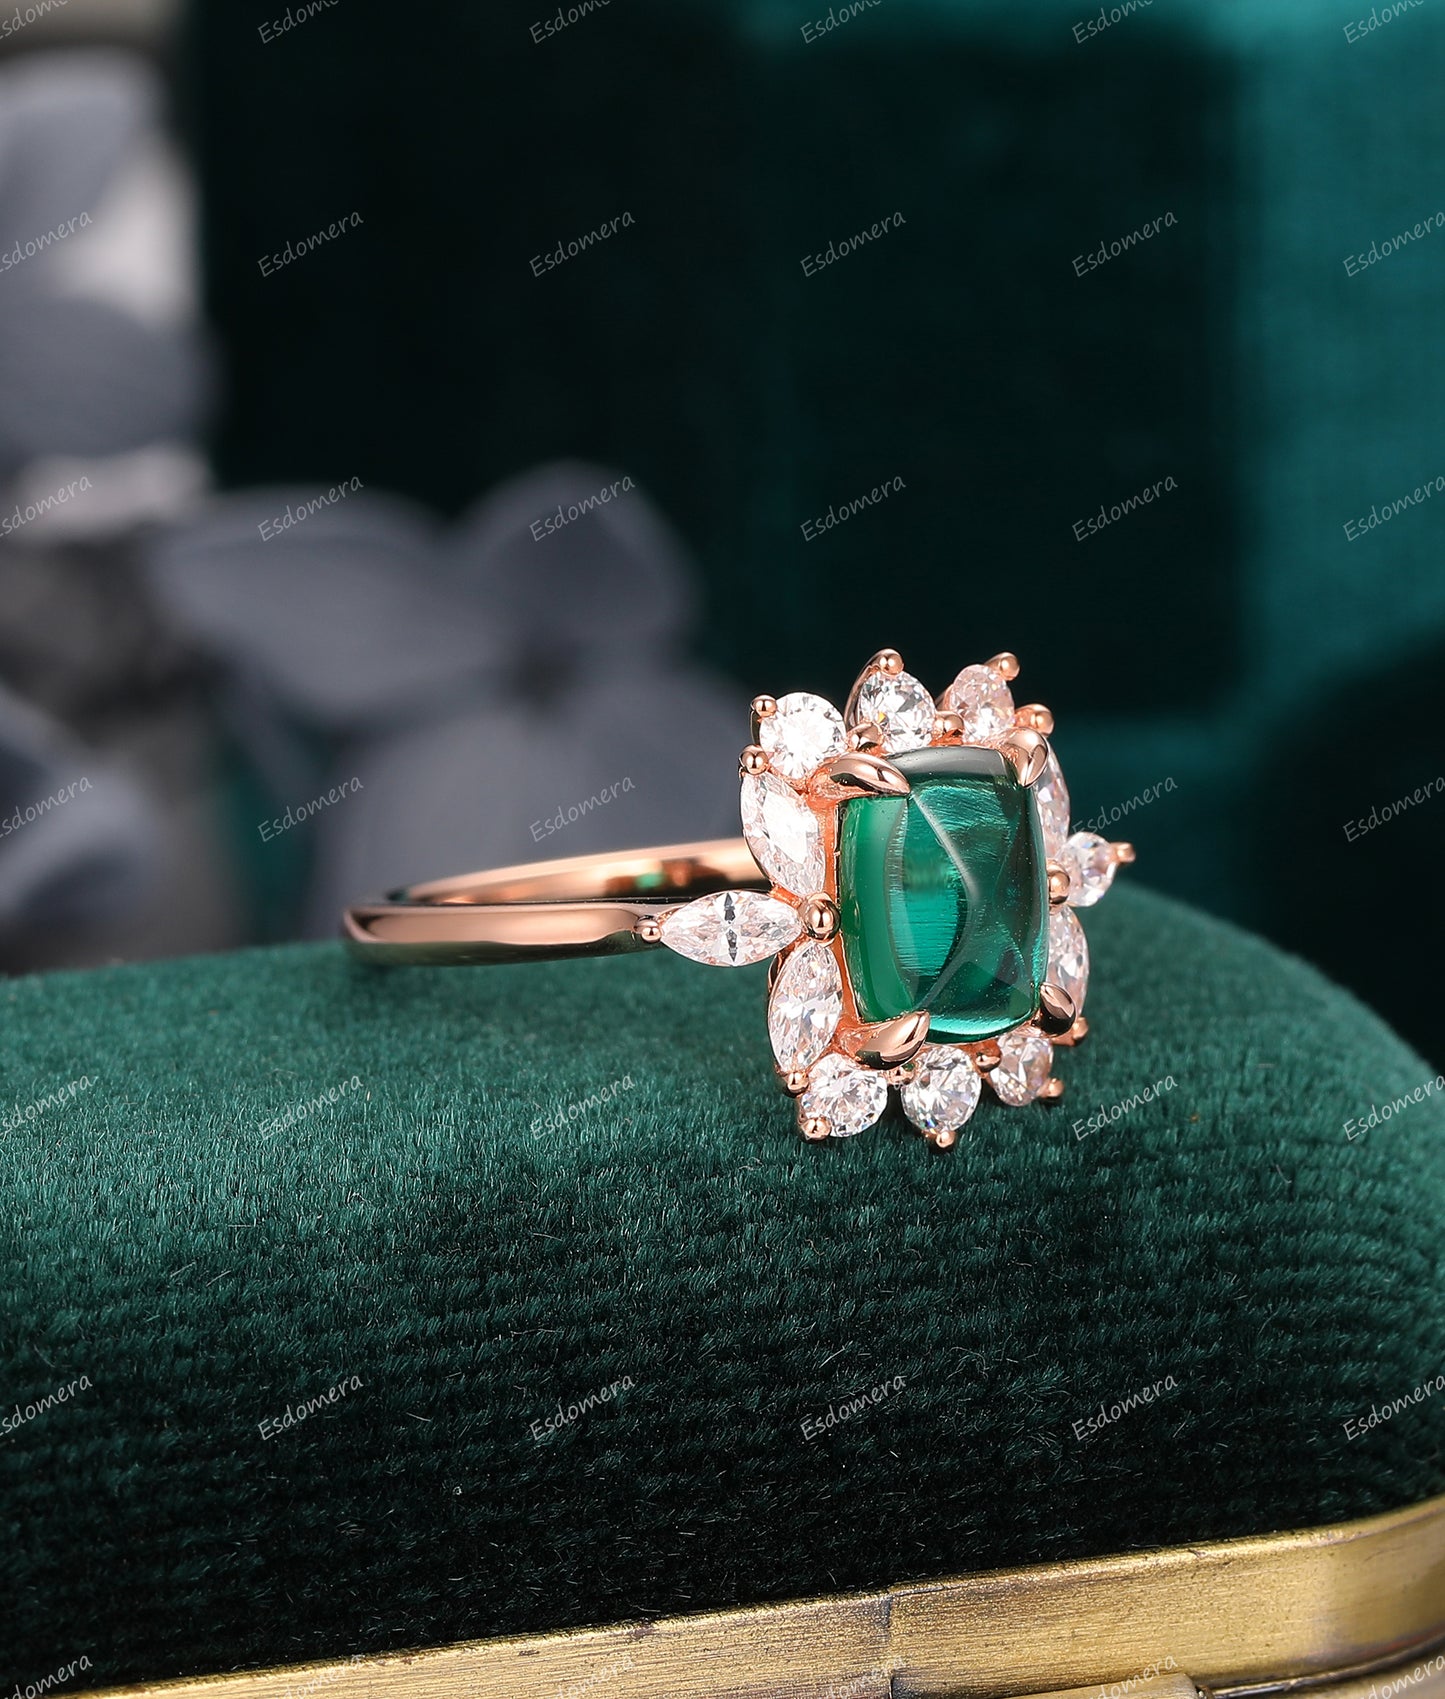 Vintage 1.80CT Long Cushion Sugar Load Cut Emerald Ring, Prong Set Ring, Moissanite Floral Halo Ring, Art Deco 14k Soild Gold Ring For Women